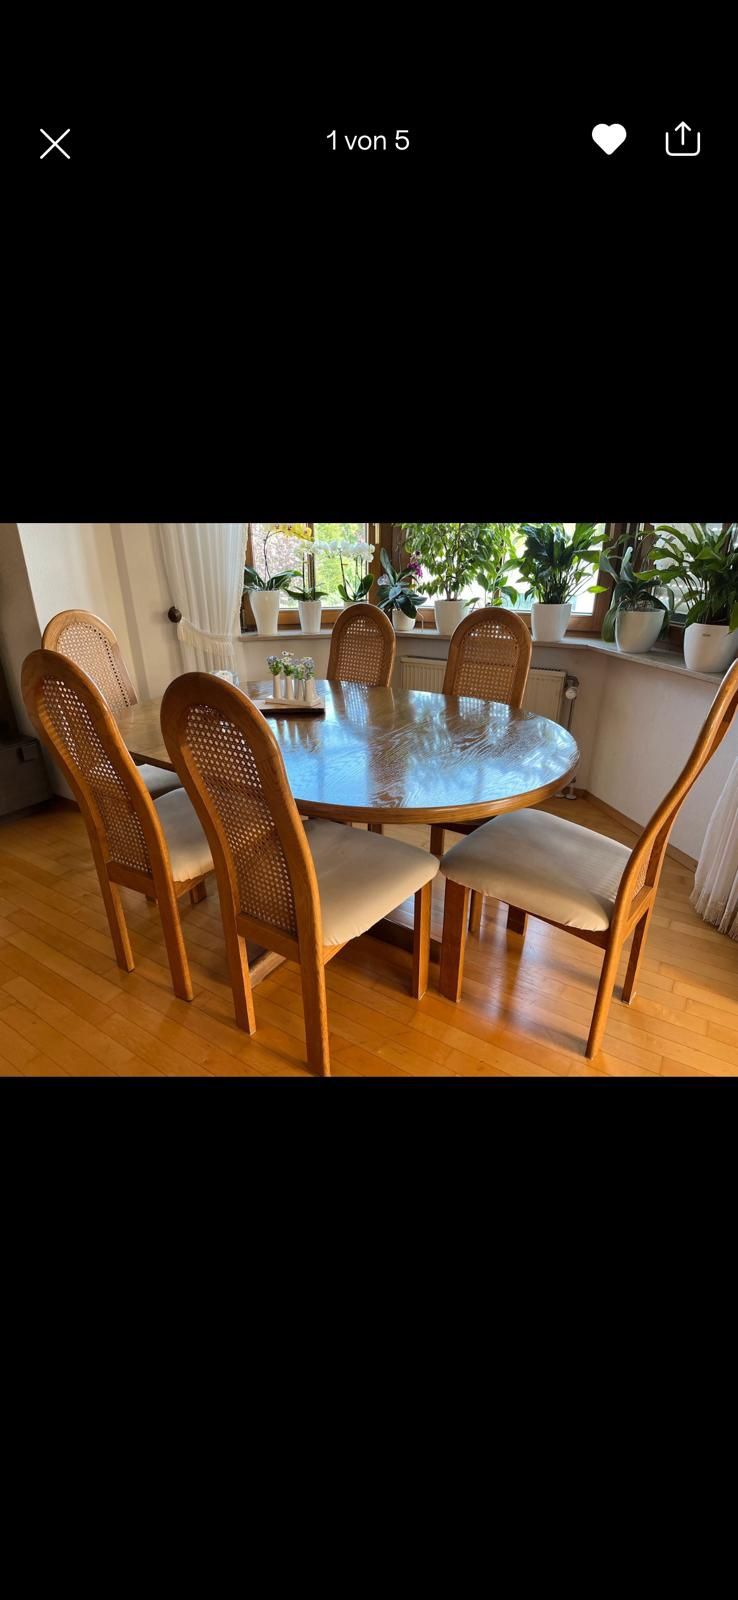 Vând masa cu 6 scaune din lemn masiv